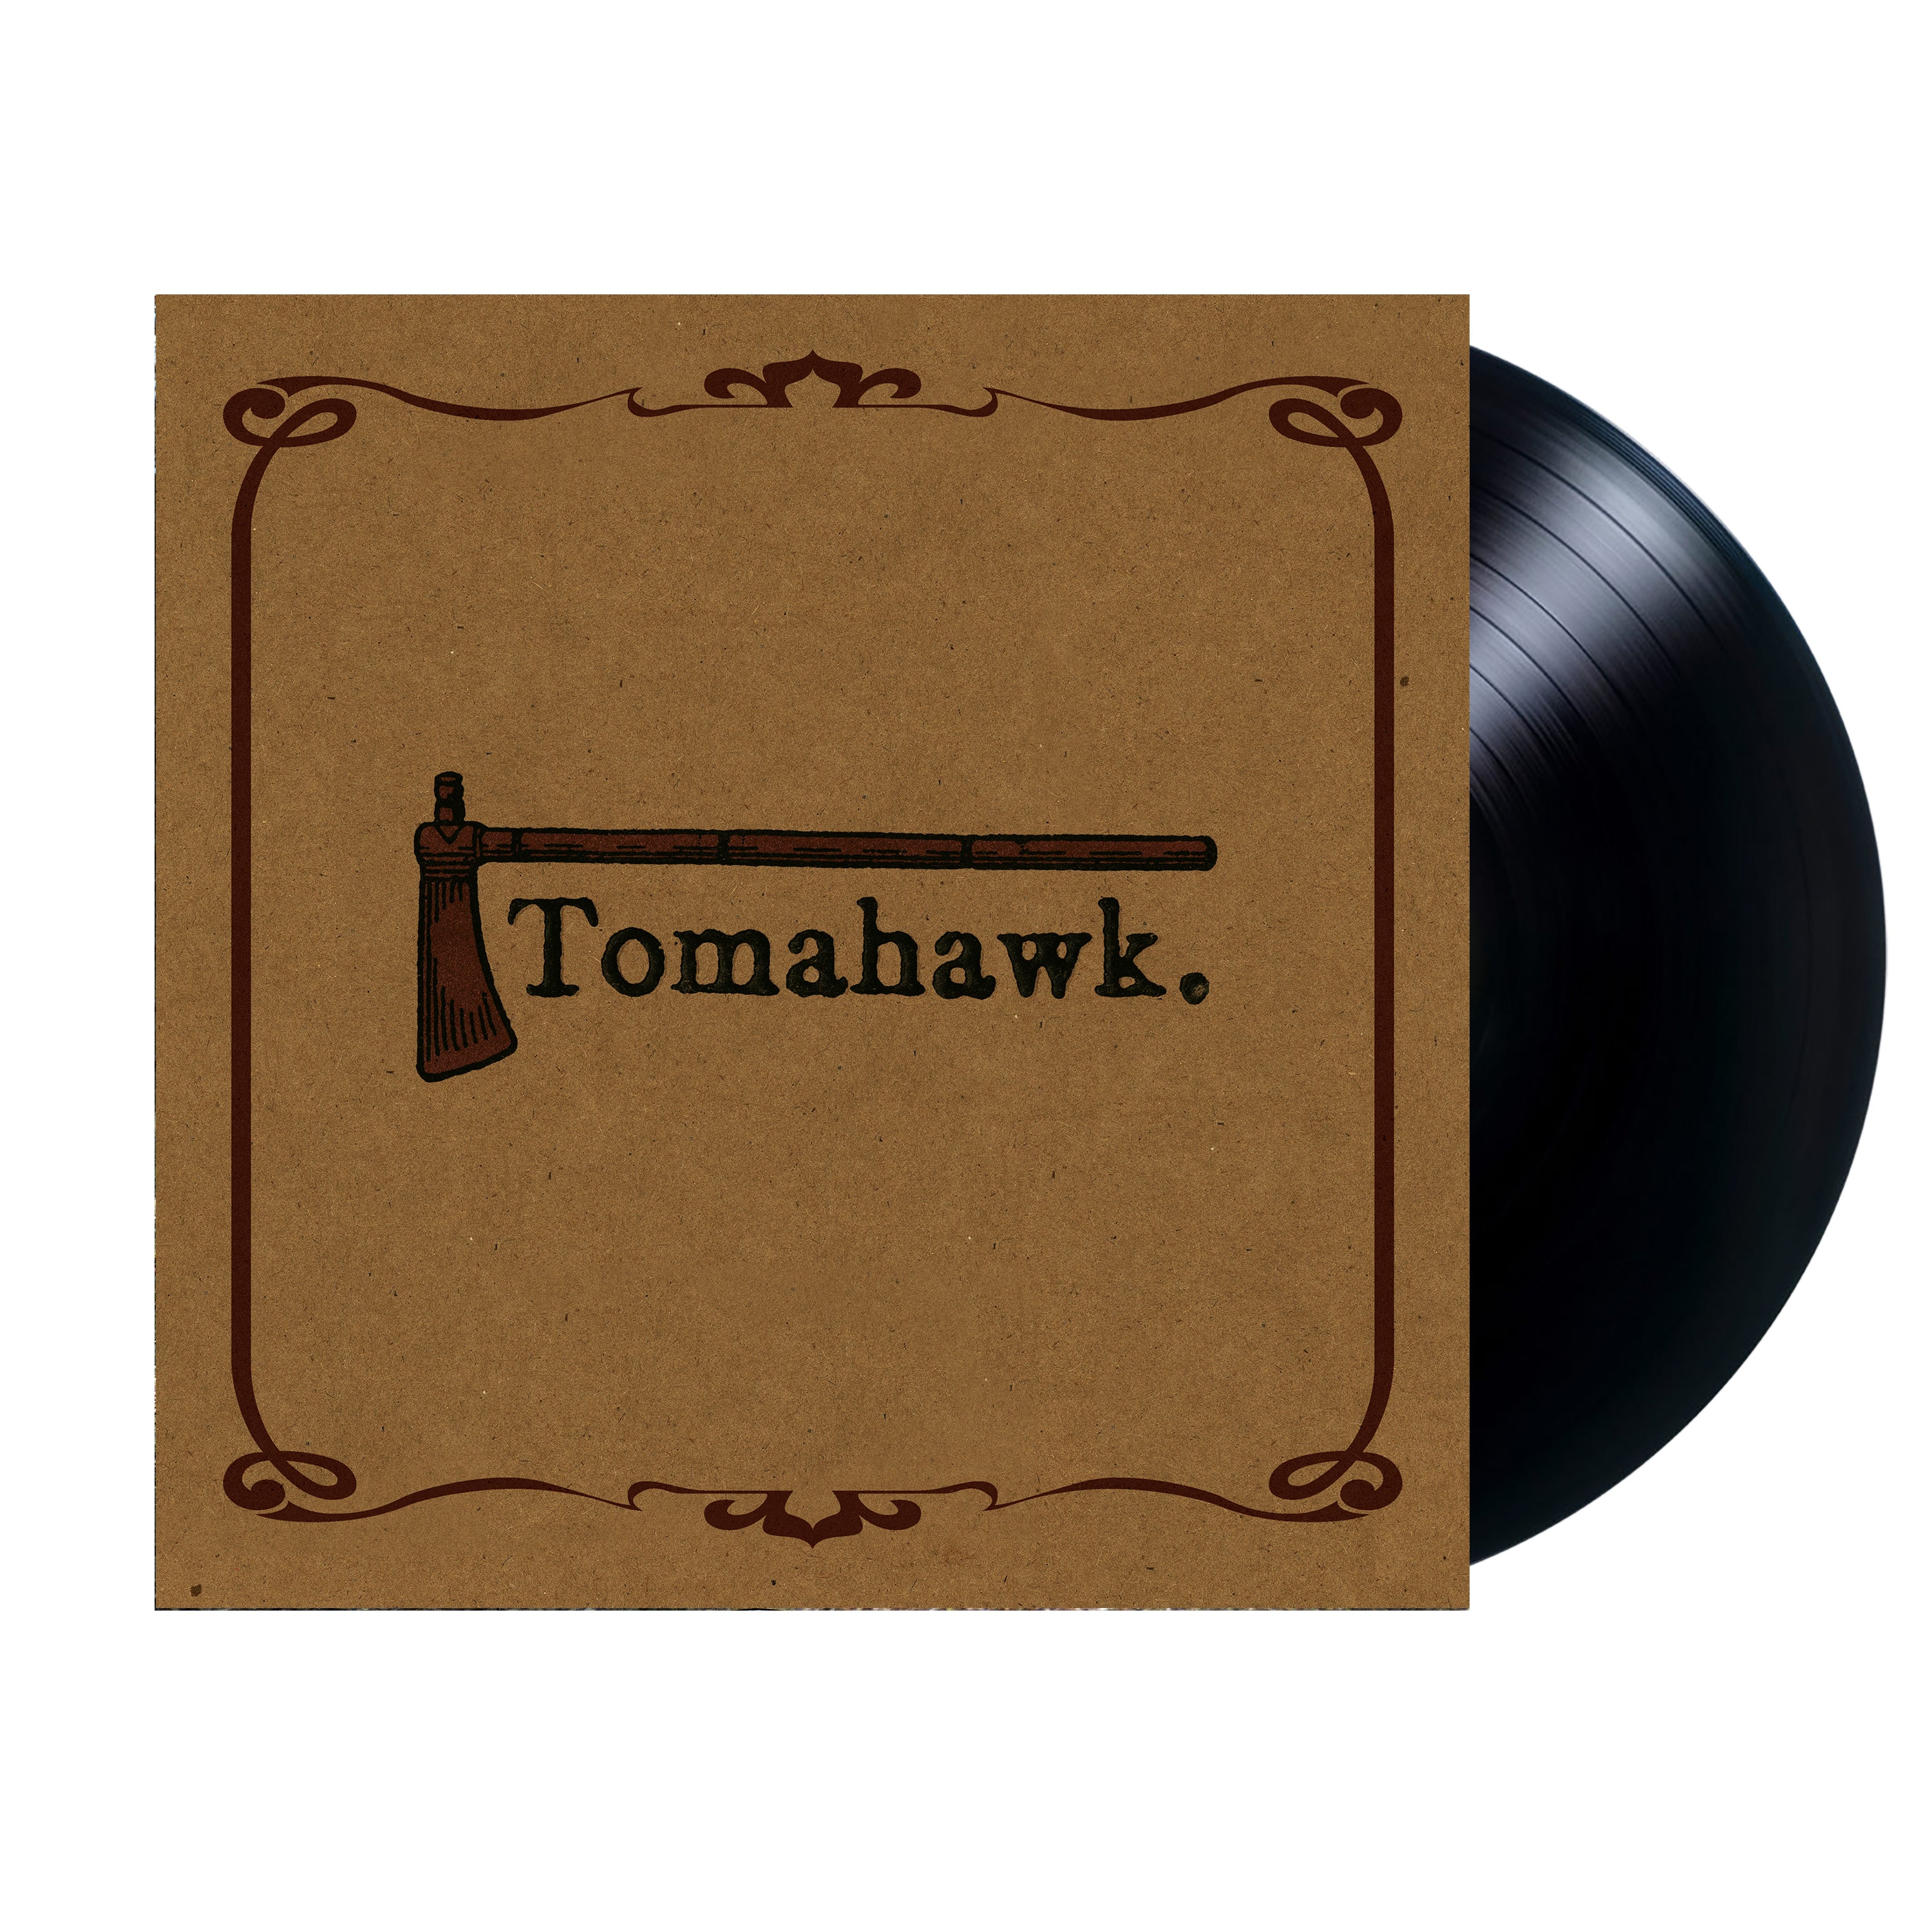 Tomahawk - Tomahawk: Vinyl LP